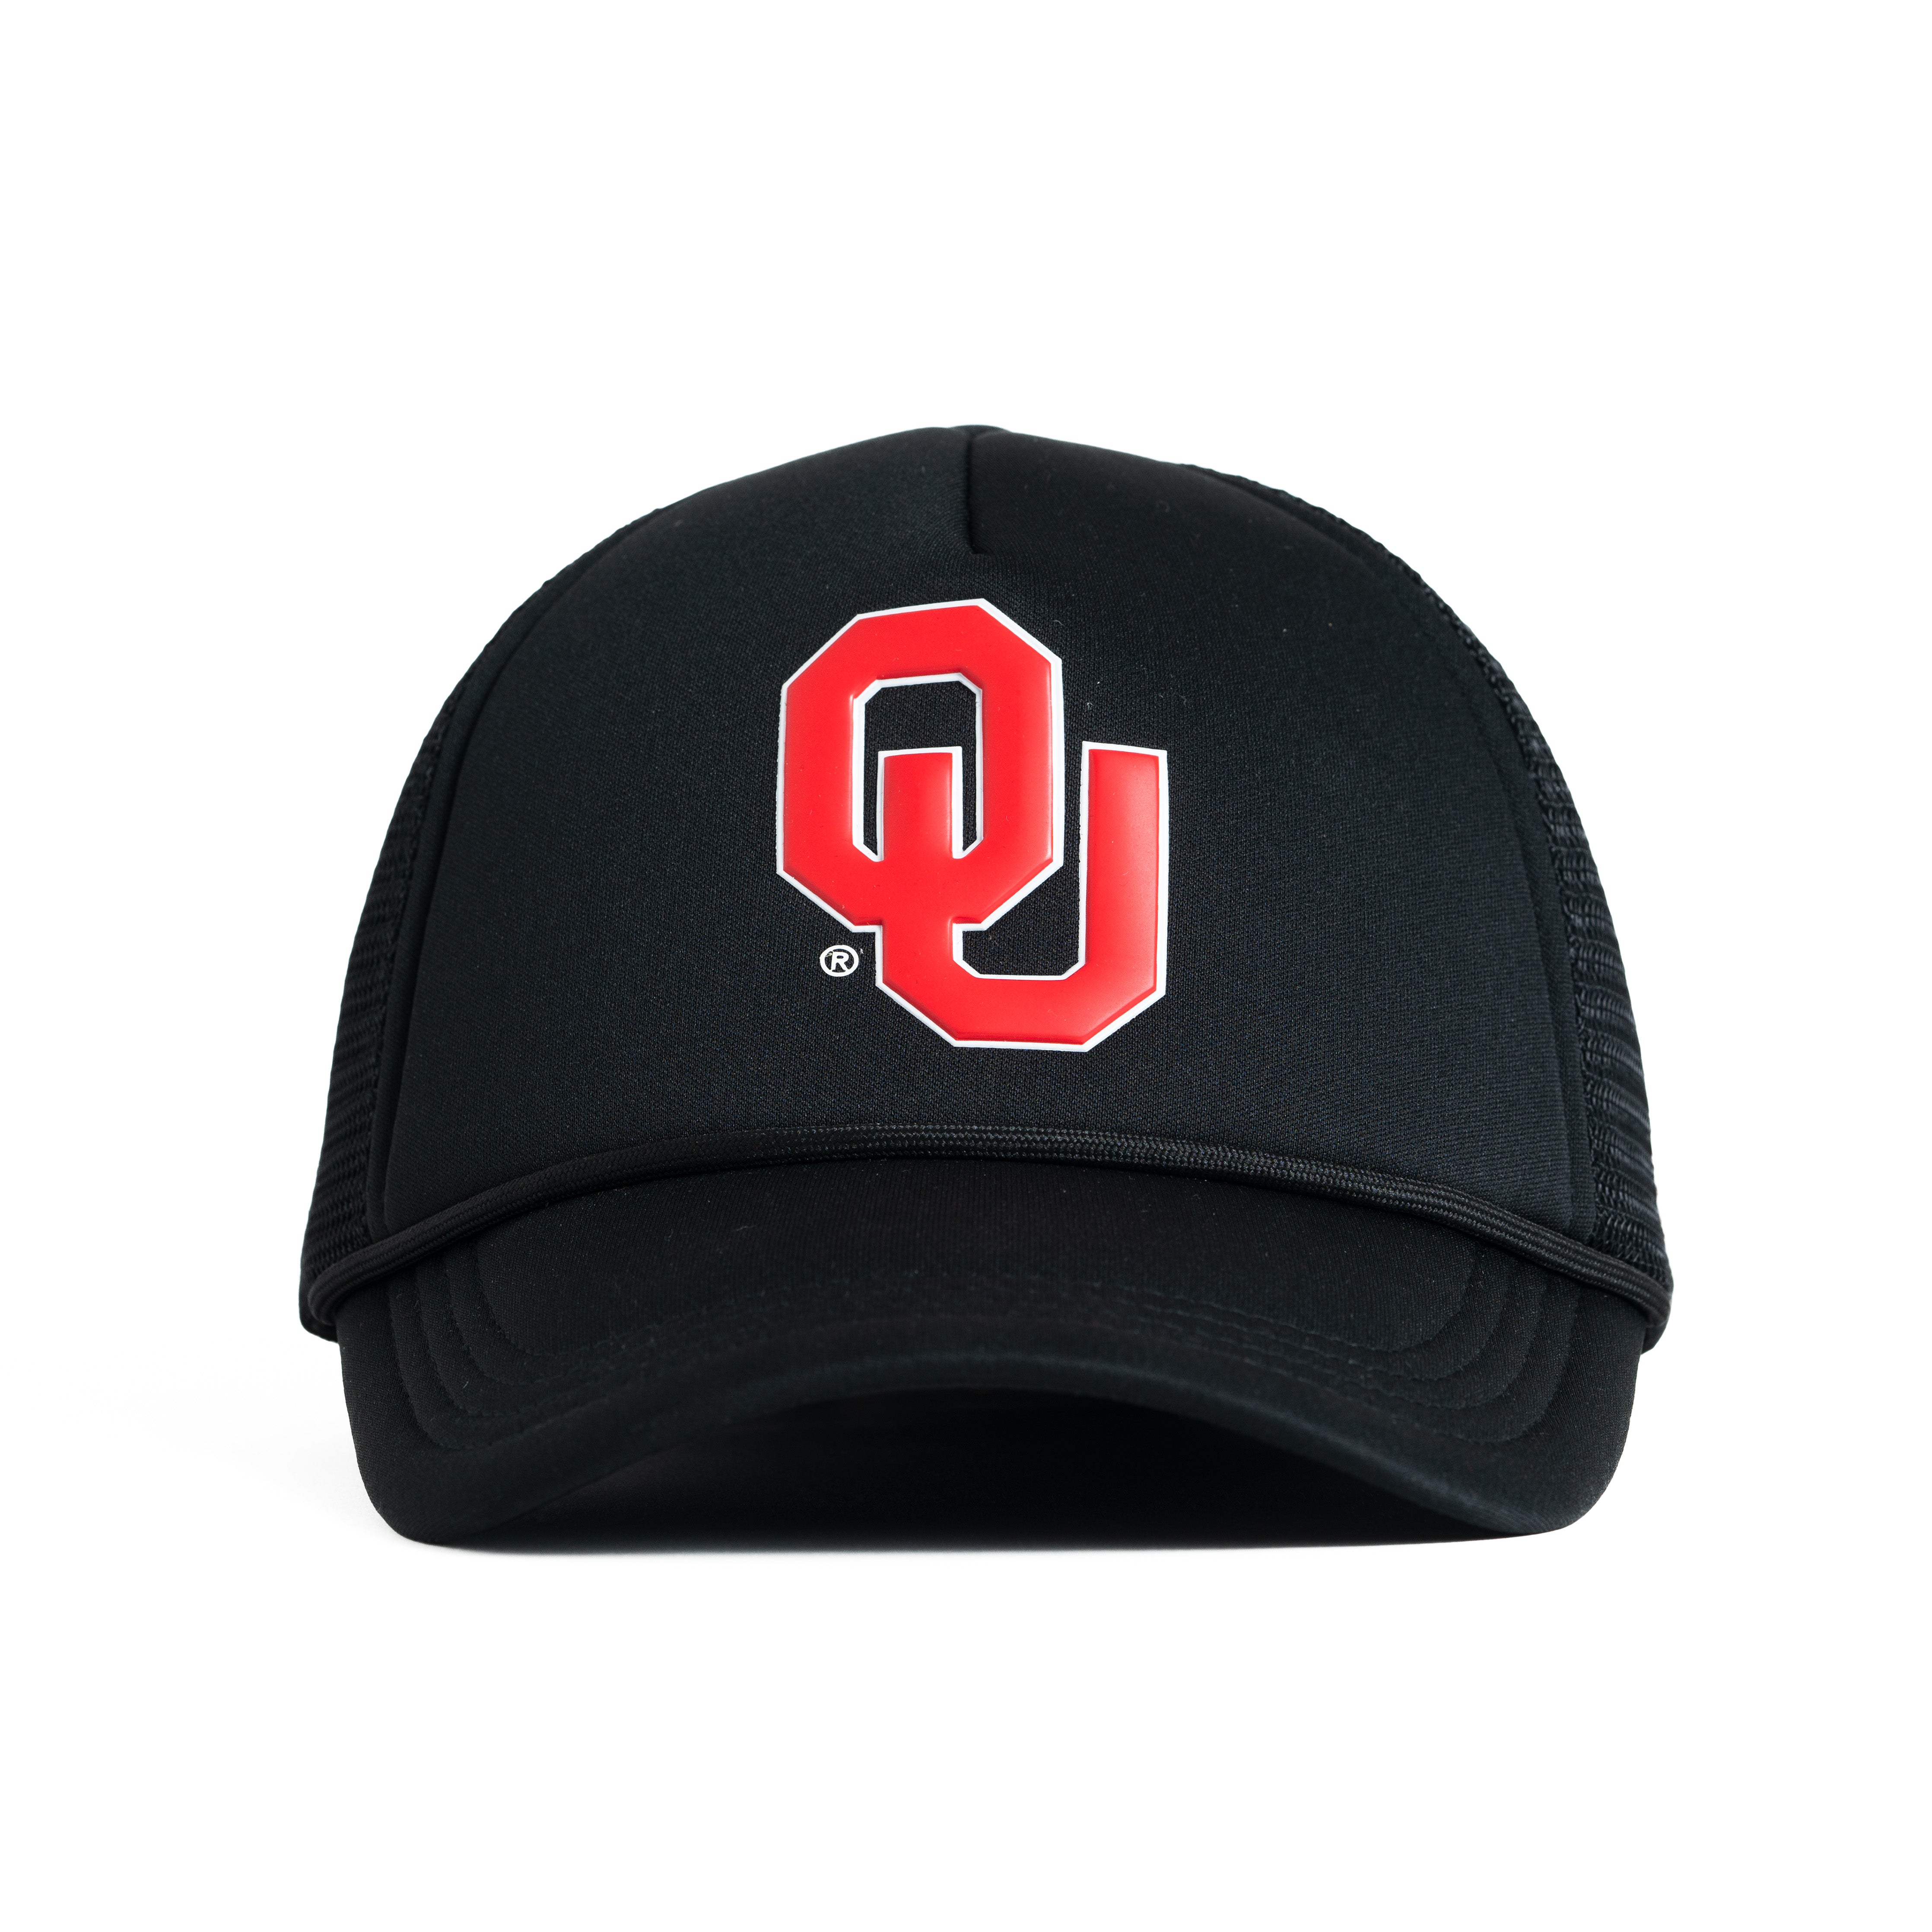 Oklahoma Sooners Black Trucker Hat